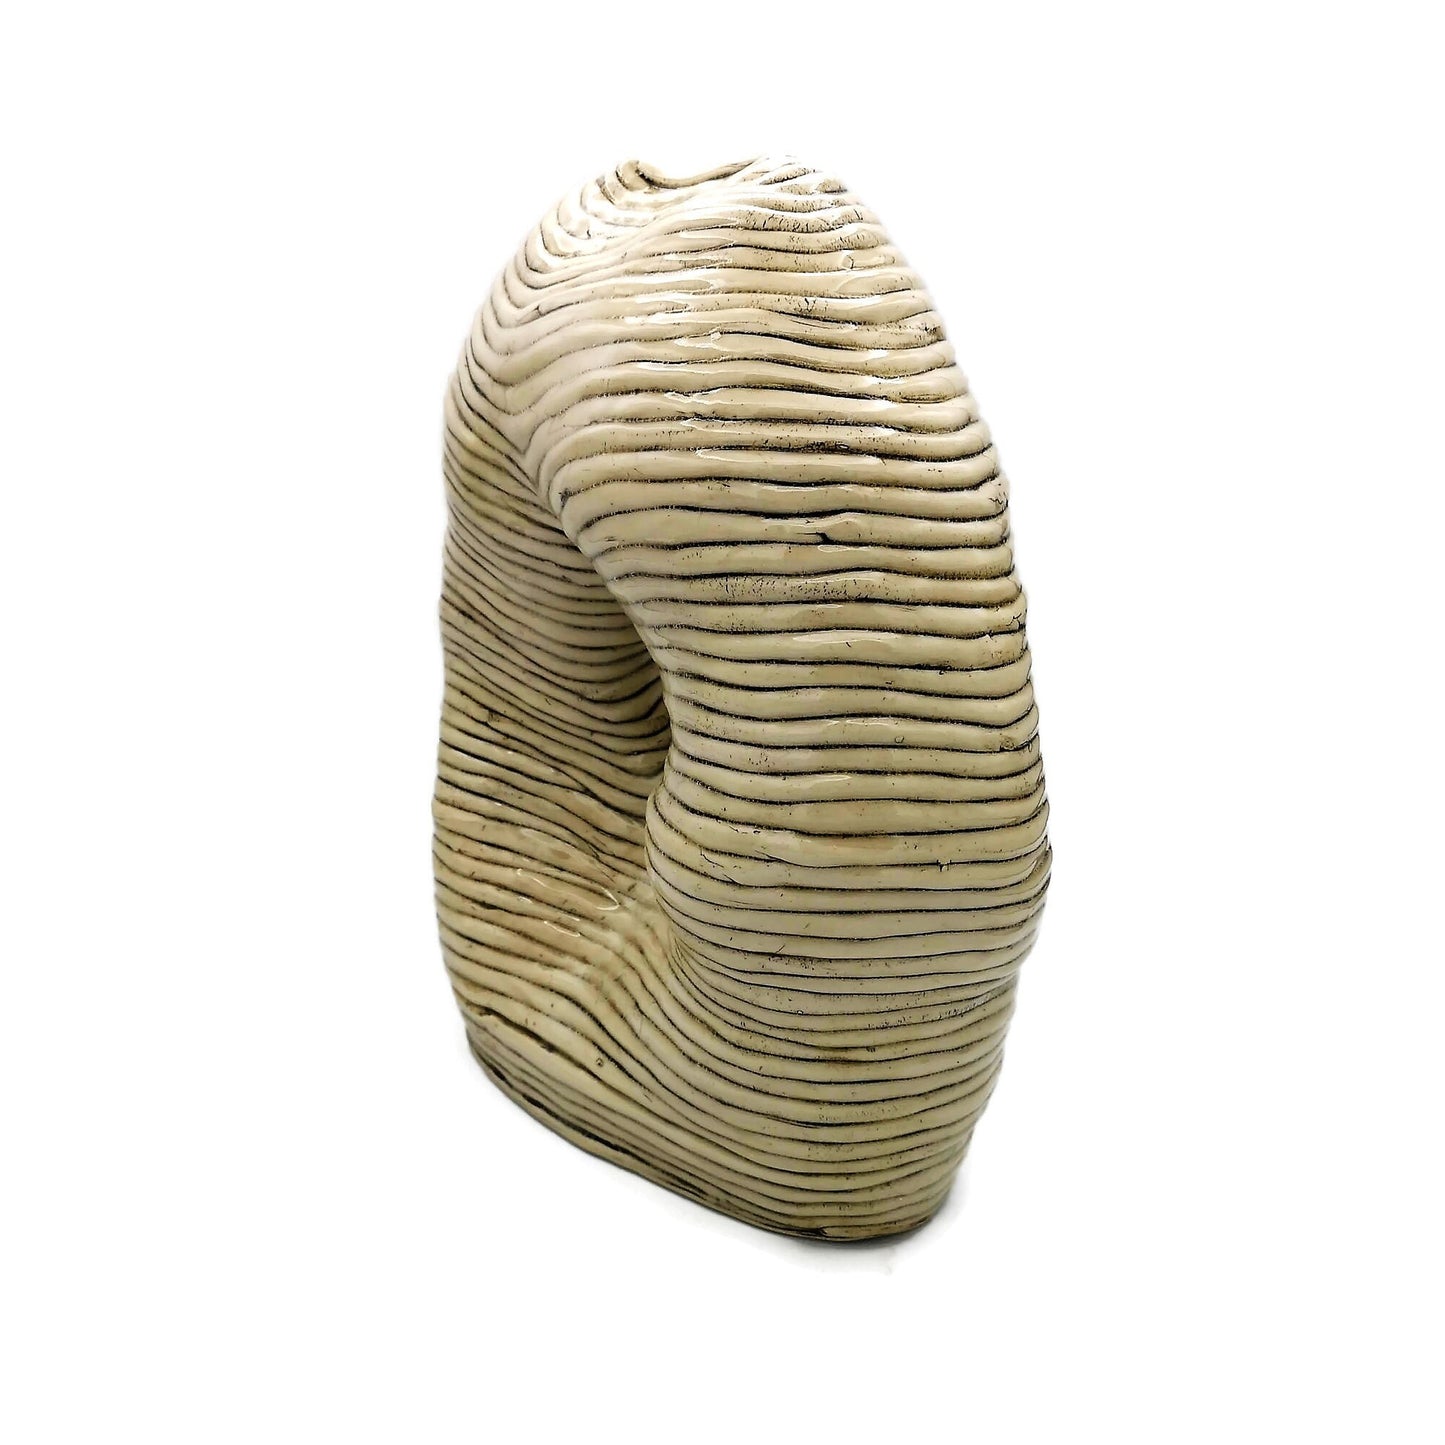 Modern Ceramic Sculpture Hollow Shaped Handmade Contemporary Art, Textured Table Sculpture, Large Floor Vase, Custom Wedding Gift For Couple - Ceramica Ana Rafael